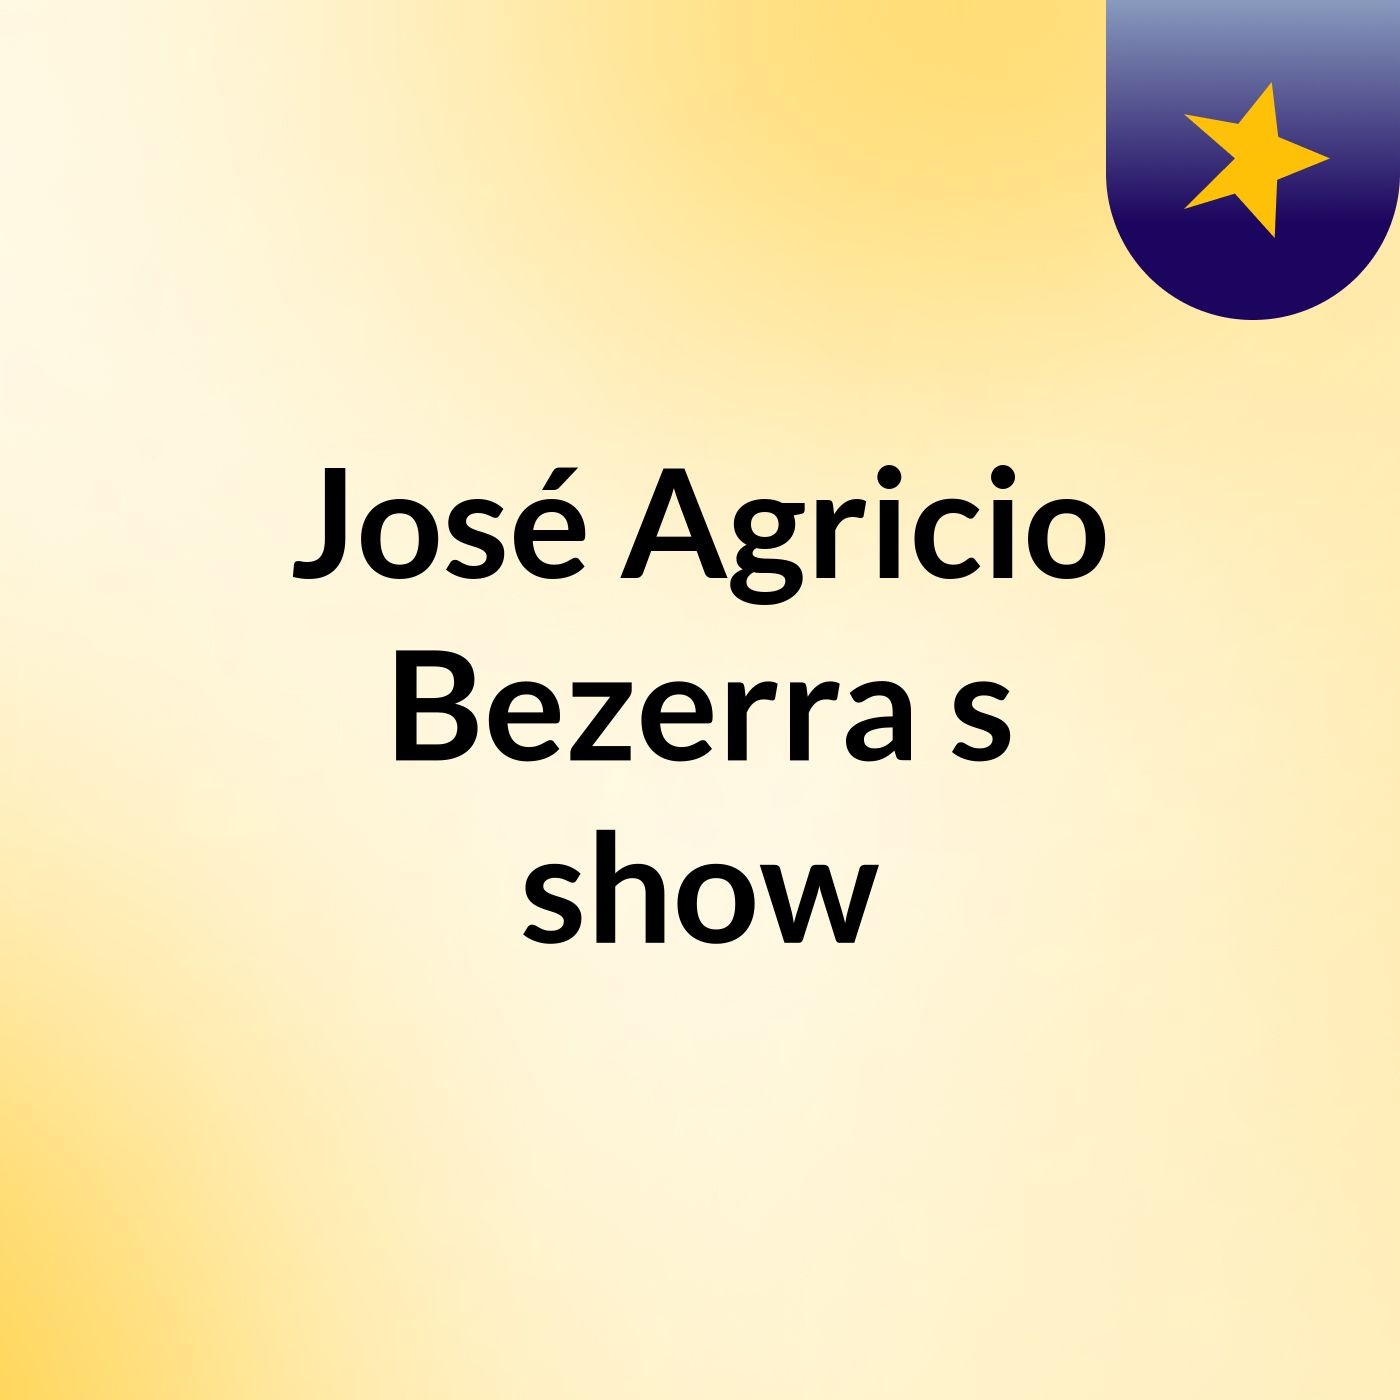 José Agricio Bezerra's show